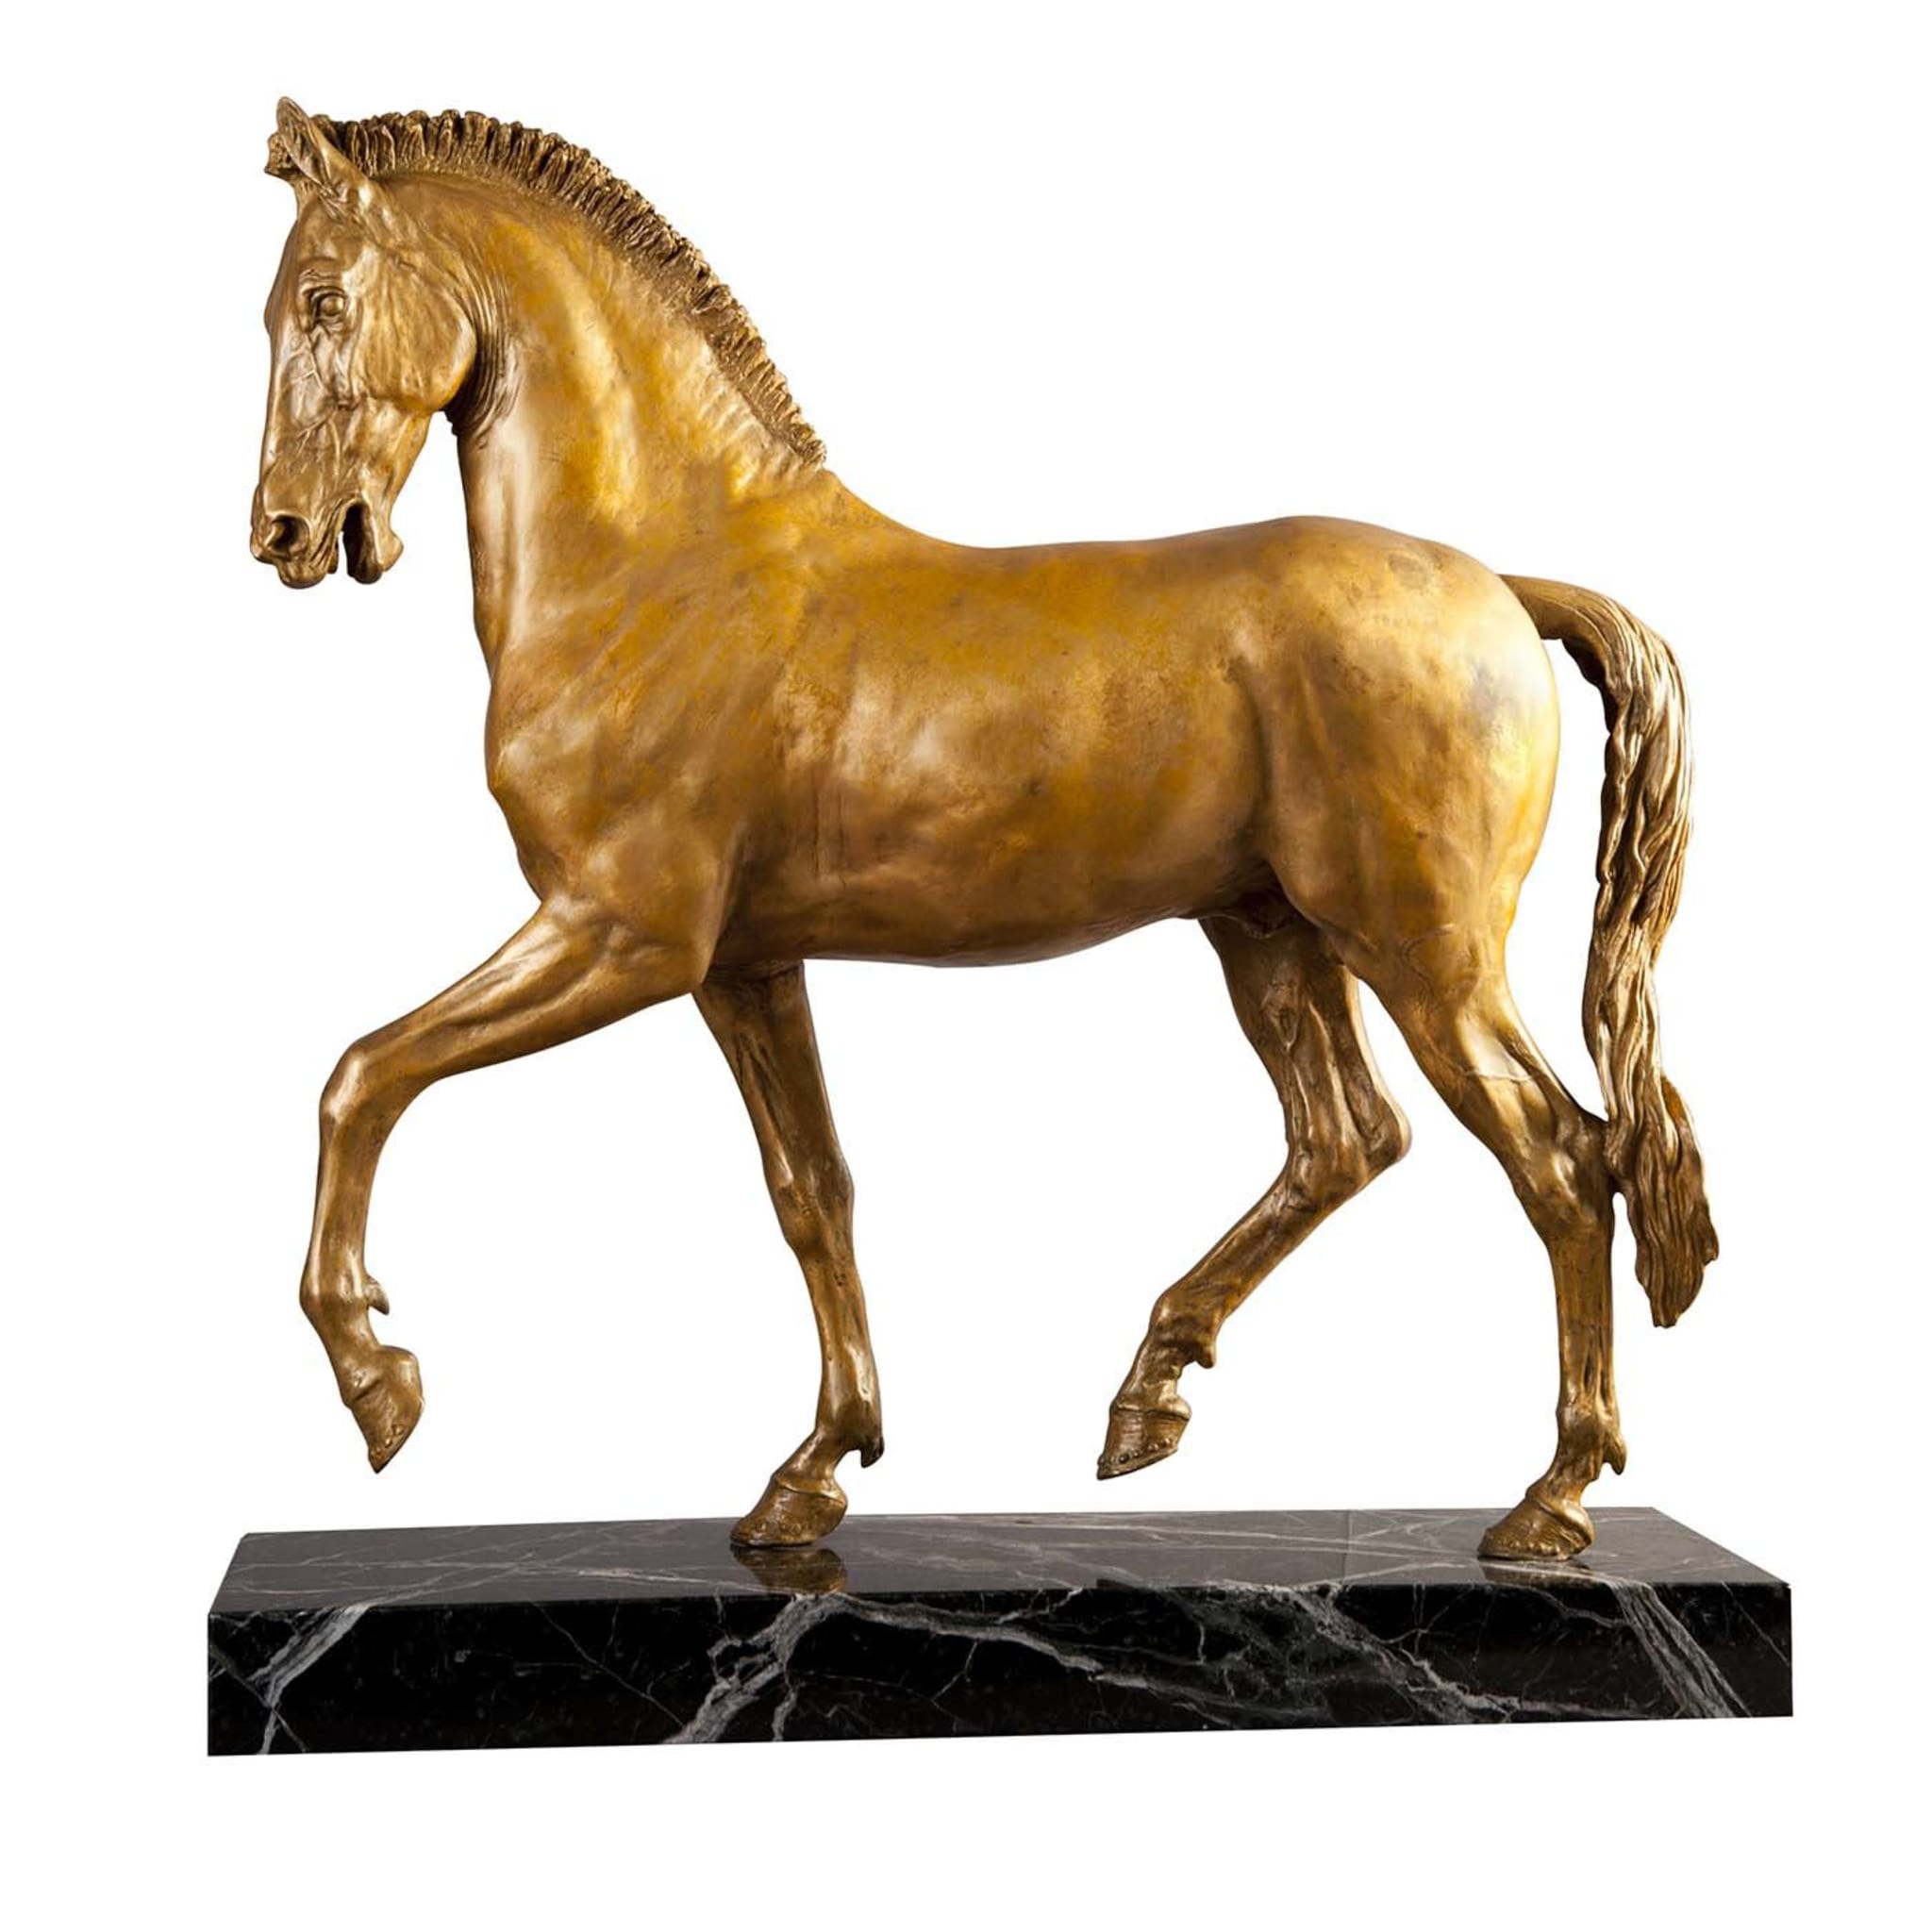 Statuette en or du cheval arabe - Vue principale